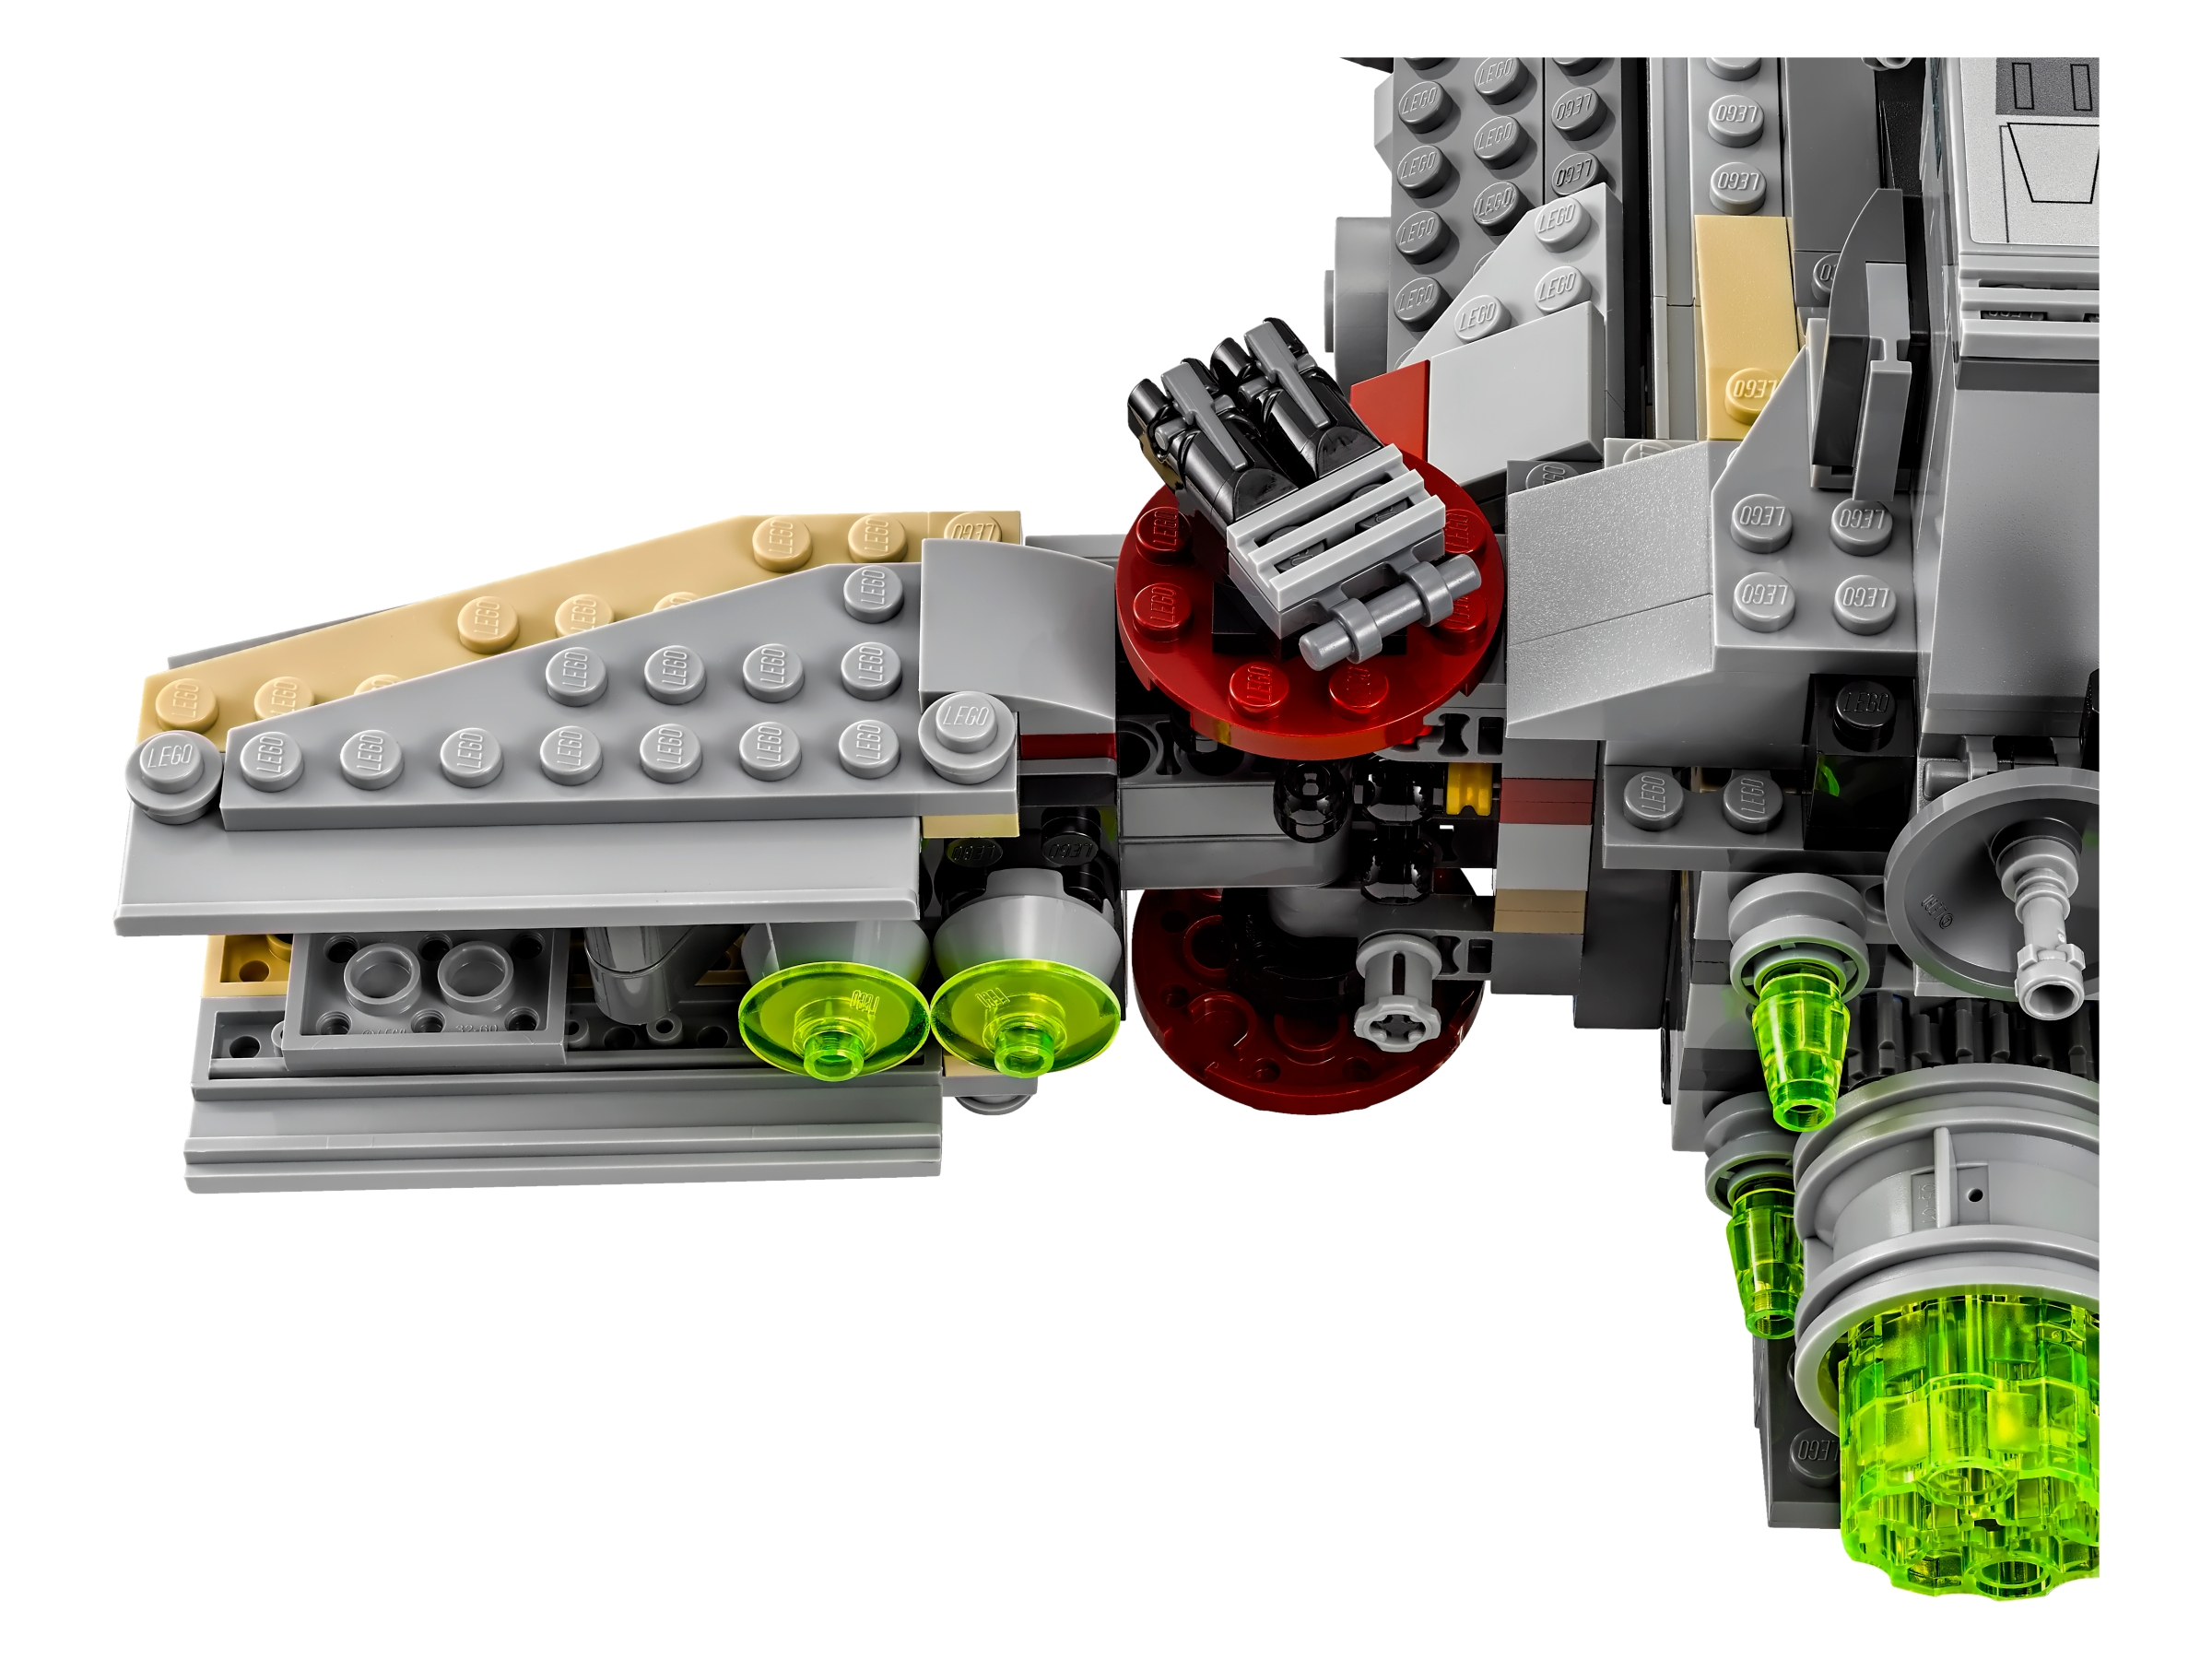 skuhati obrok vlaga Personifikacija  Rebel Combat Frigate 75158 | Star Wars™ | Buy online at the Official LEGO®  Shop US